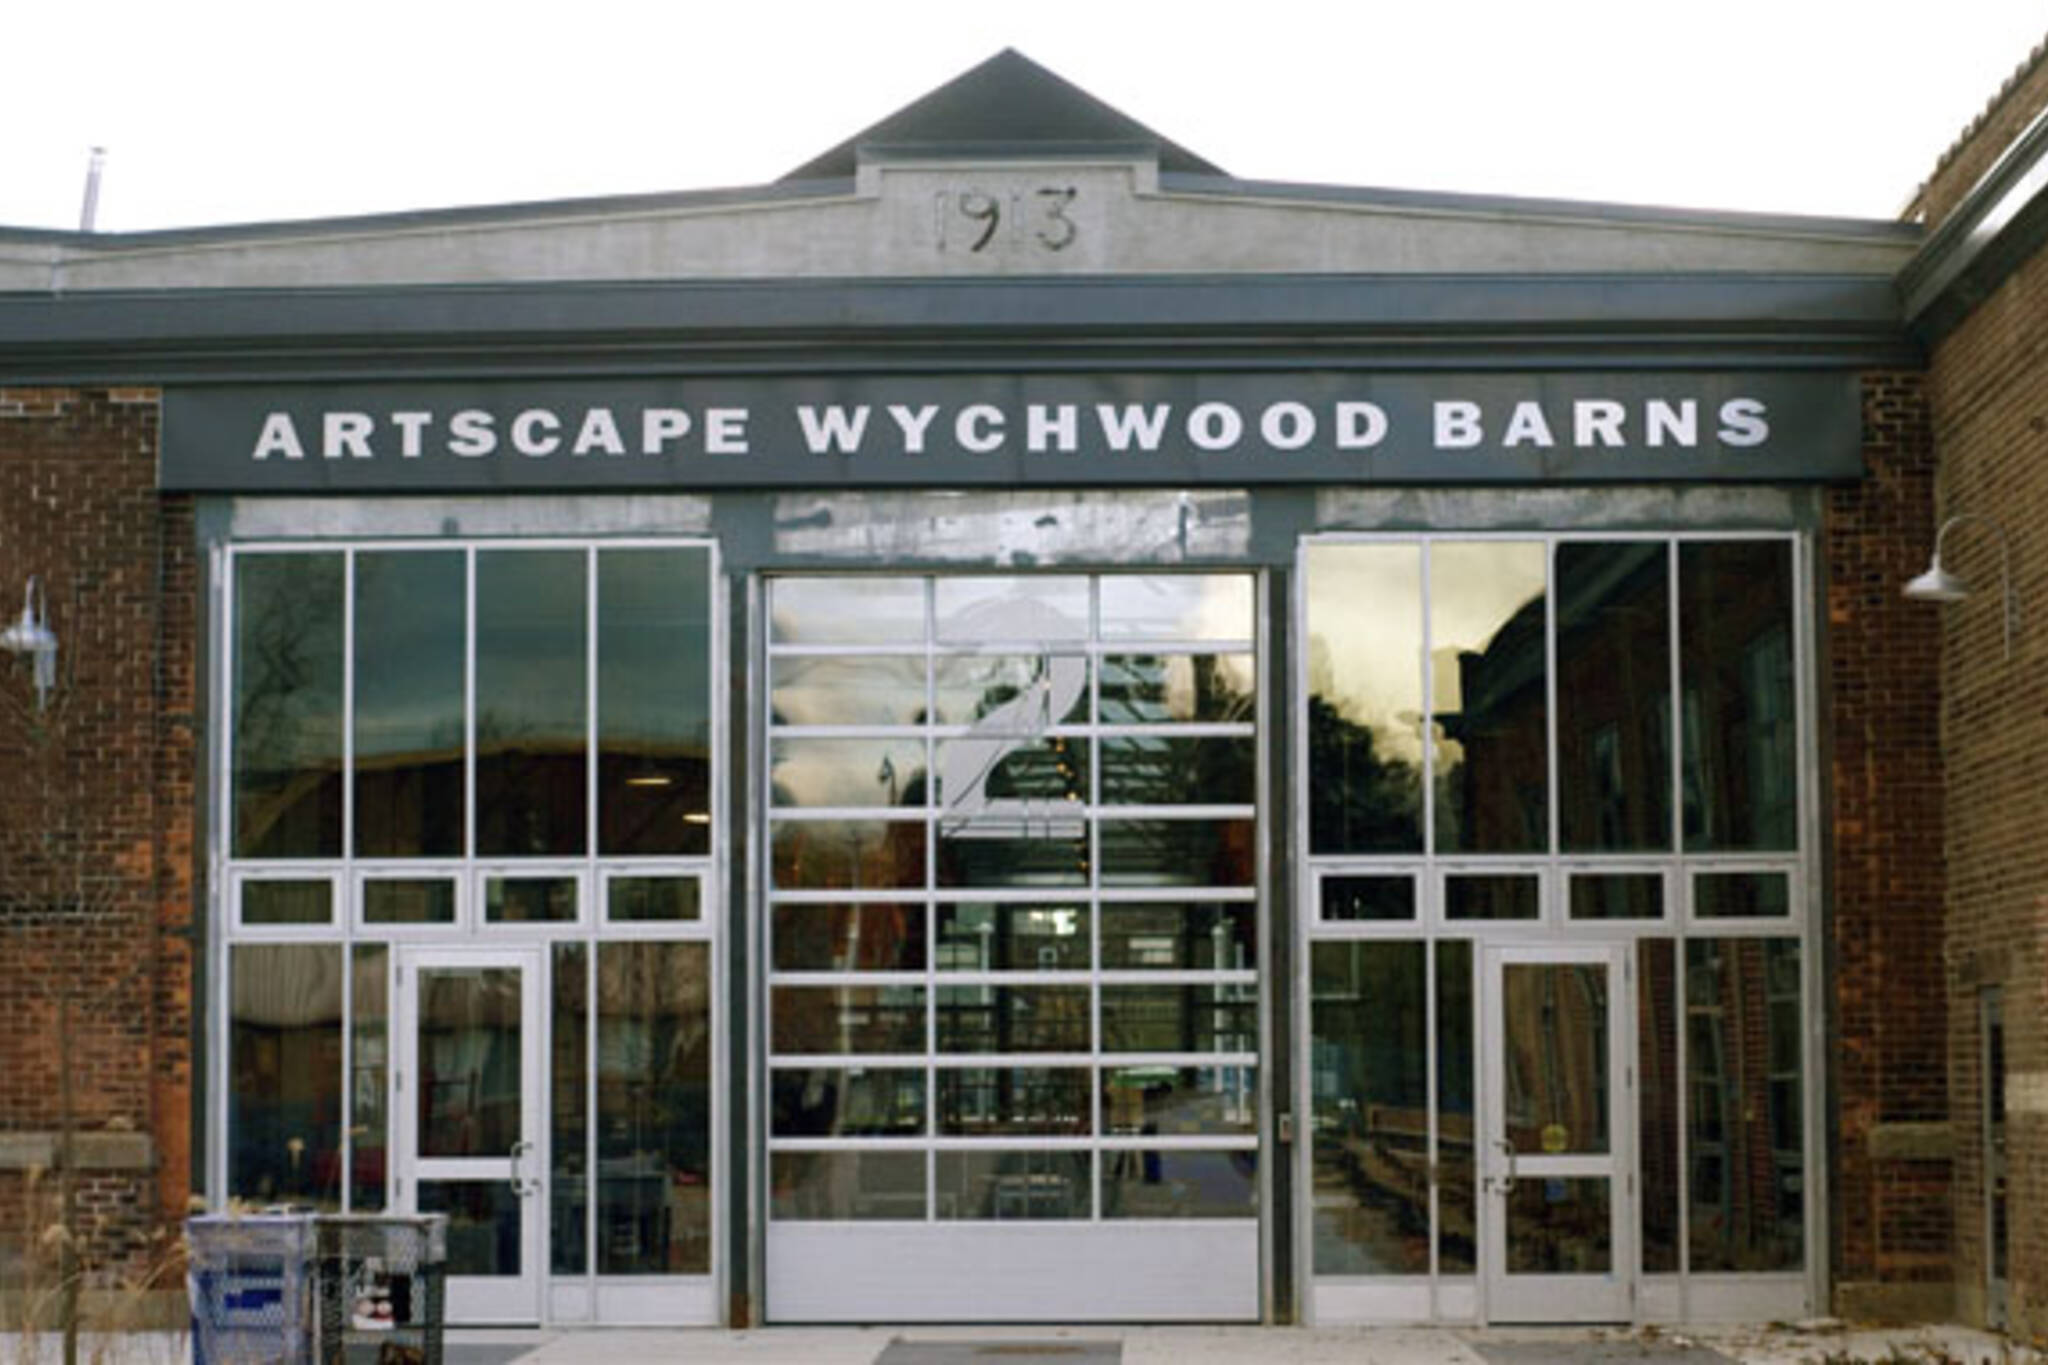 Artscape Wychwood Barns opening